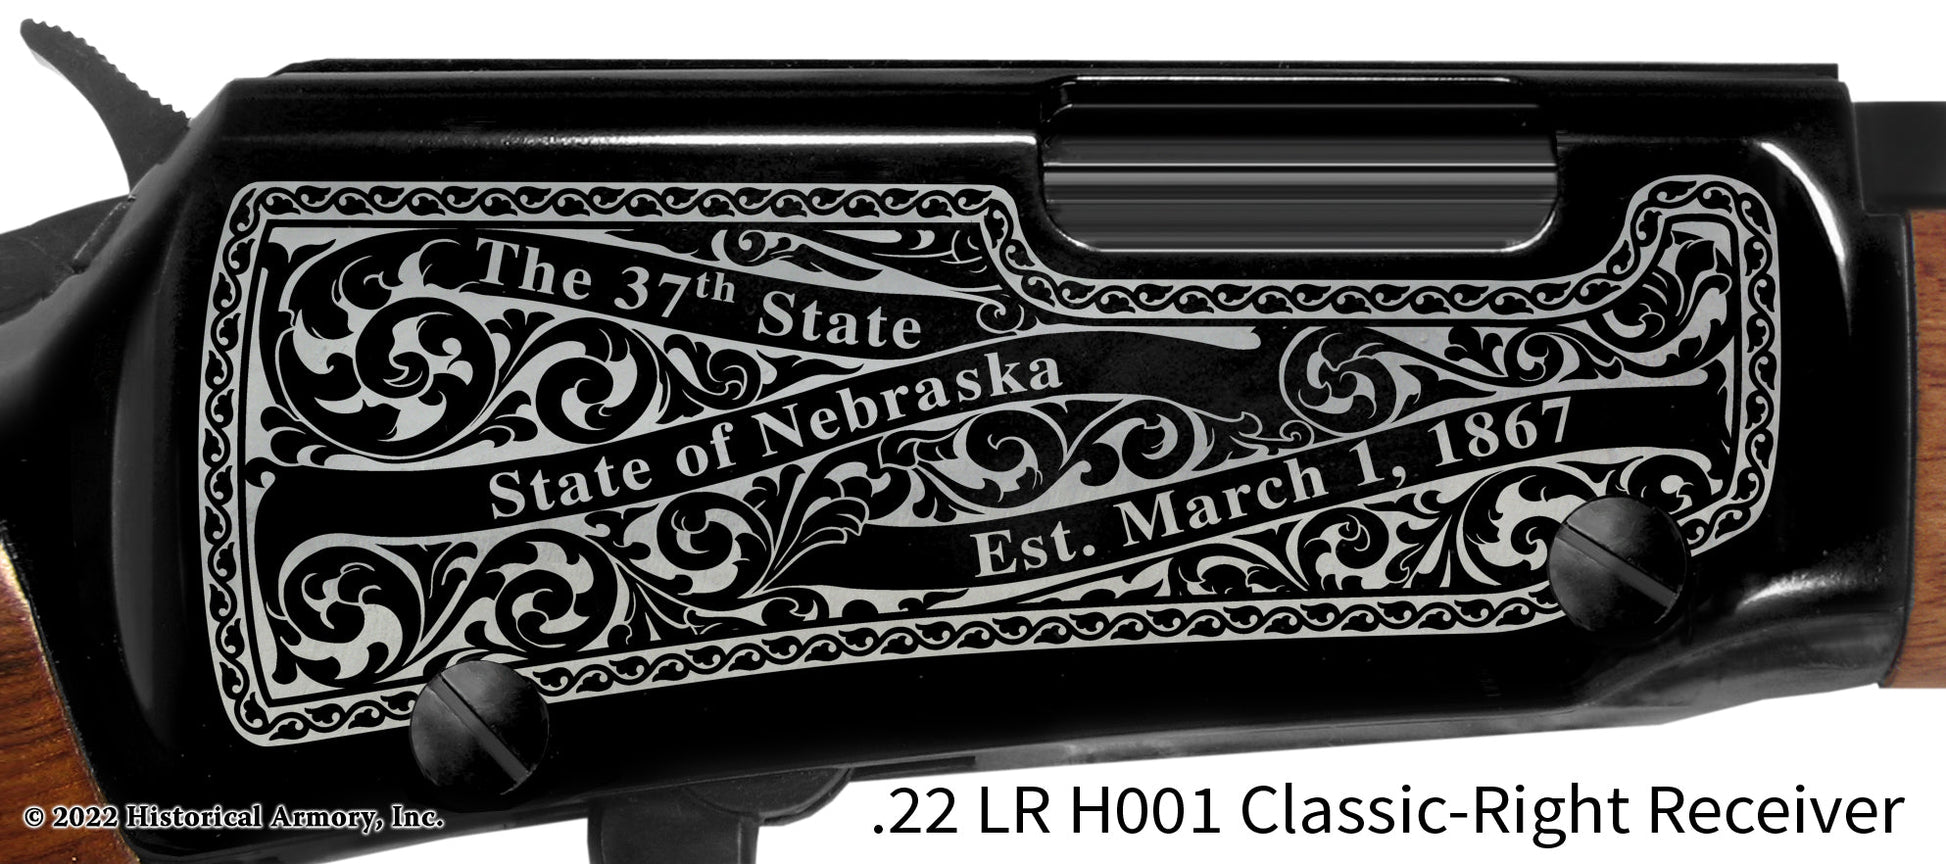 Chase County Nebraska Engraved Henry H001 Rifle